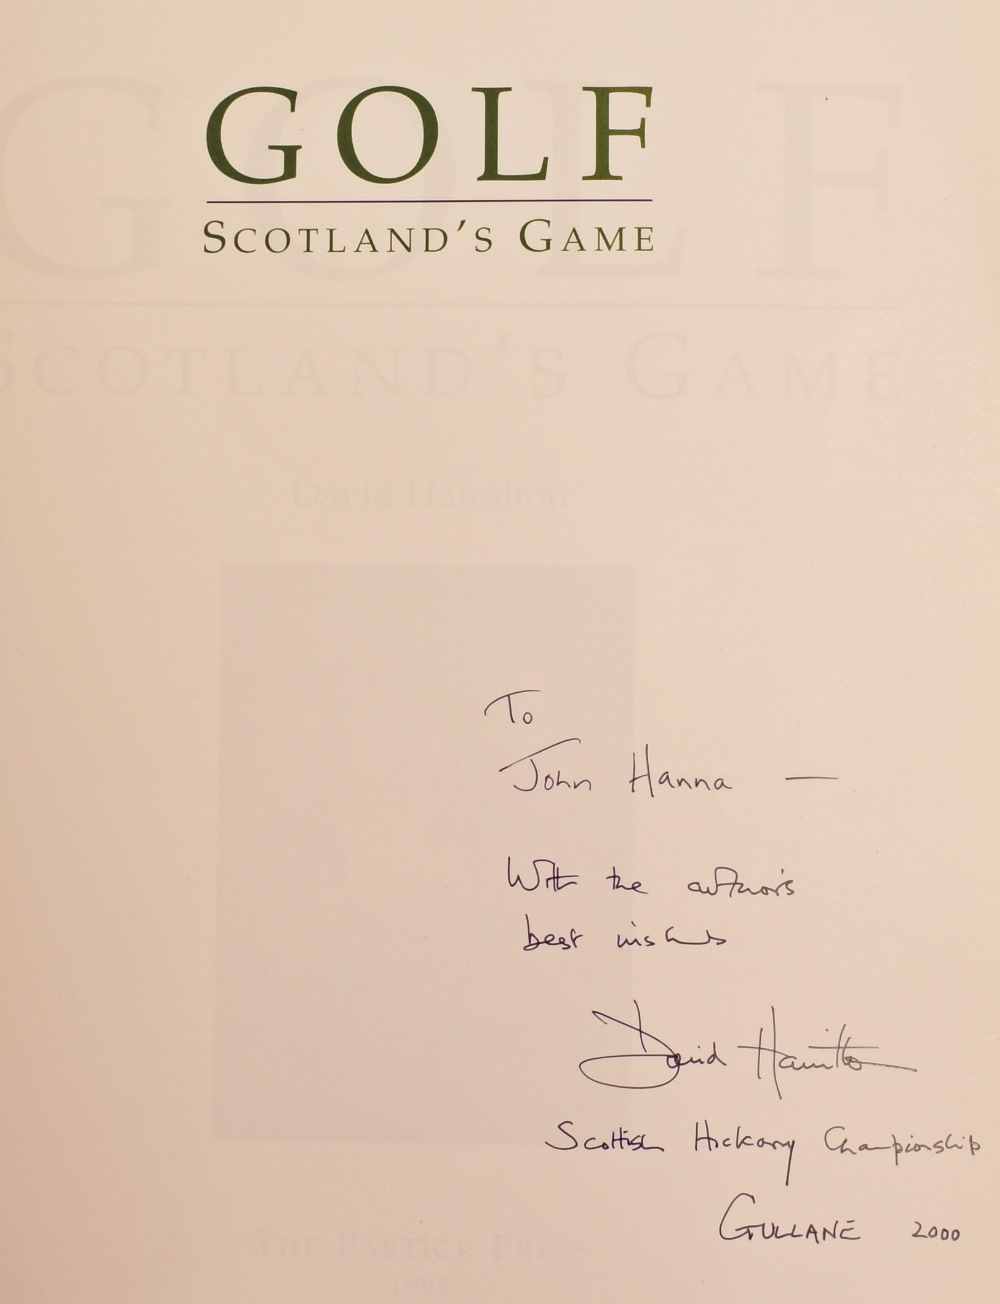 Interesting collection of Scottish History Golf Books - one signed (4)-David Hamilton signed - “Golf - Image 2 of 2